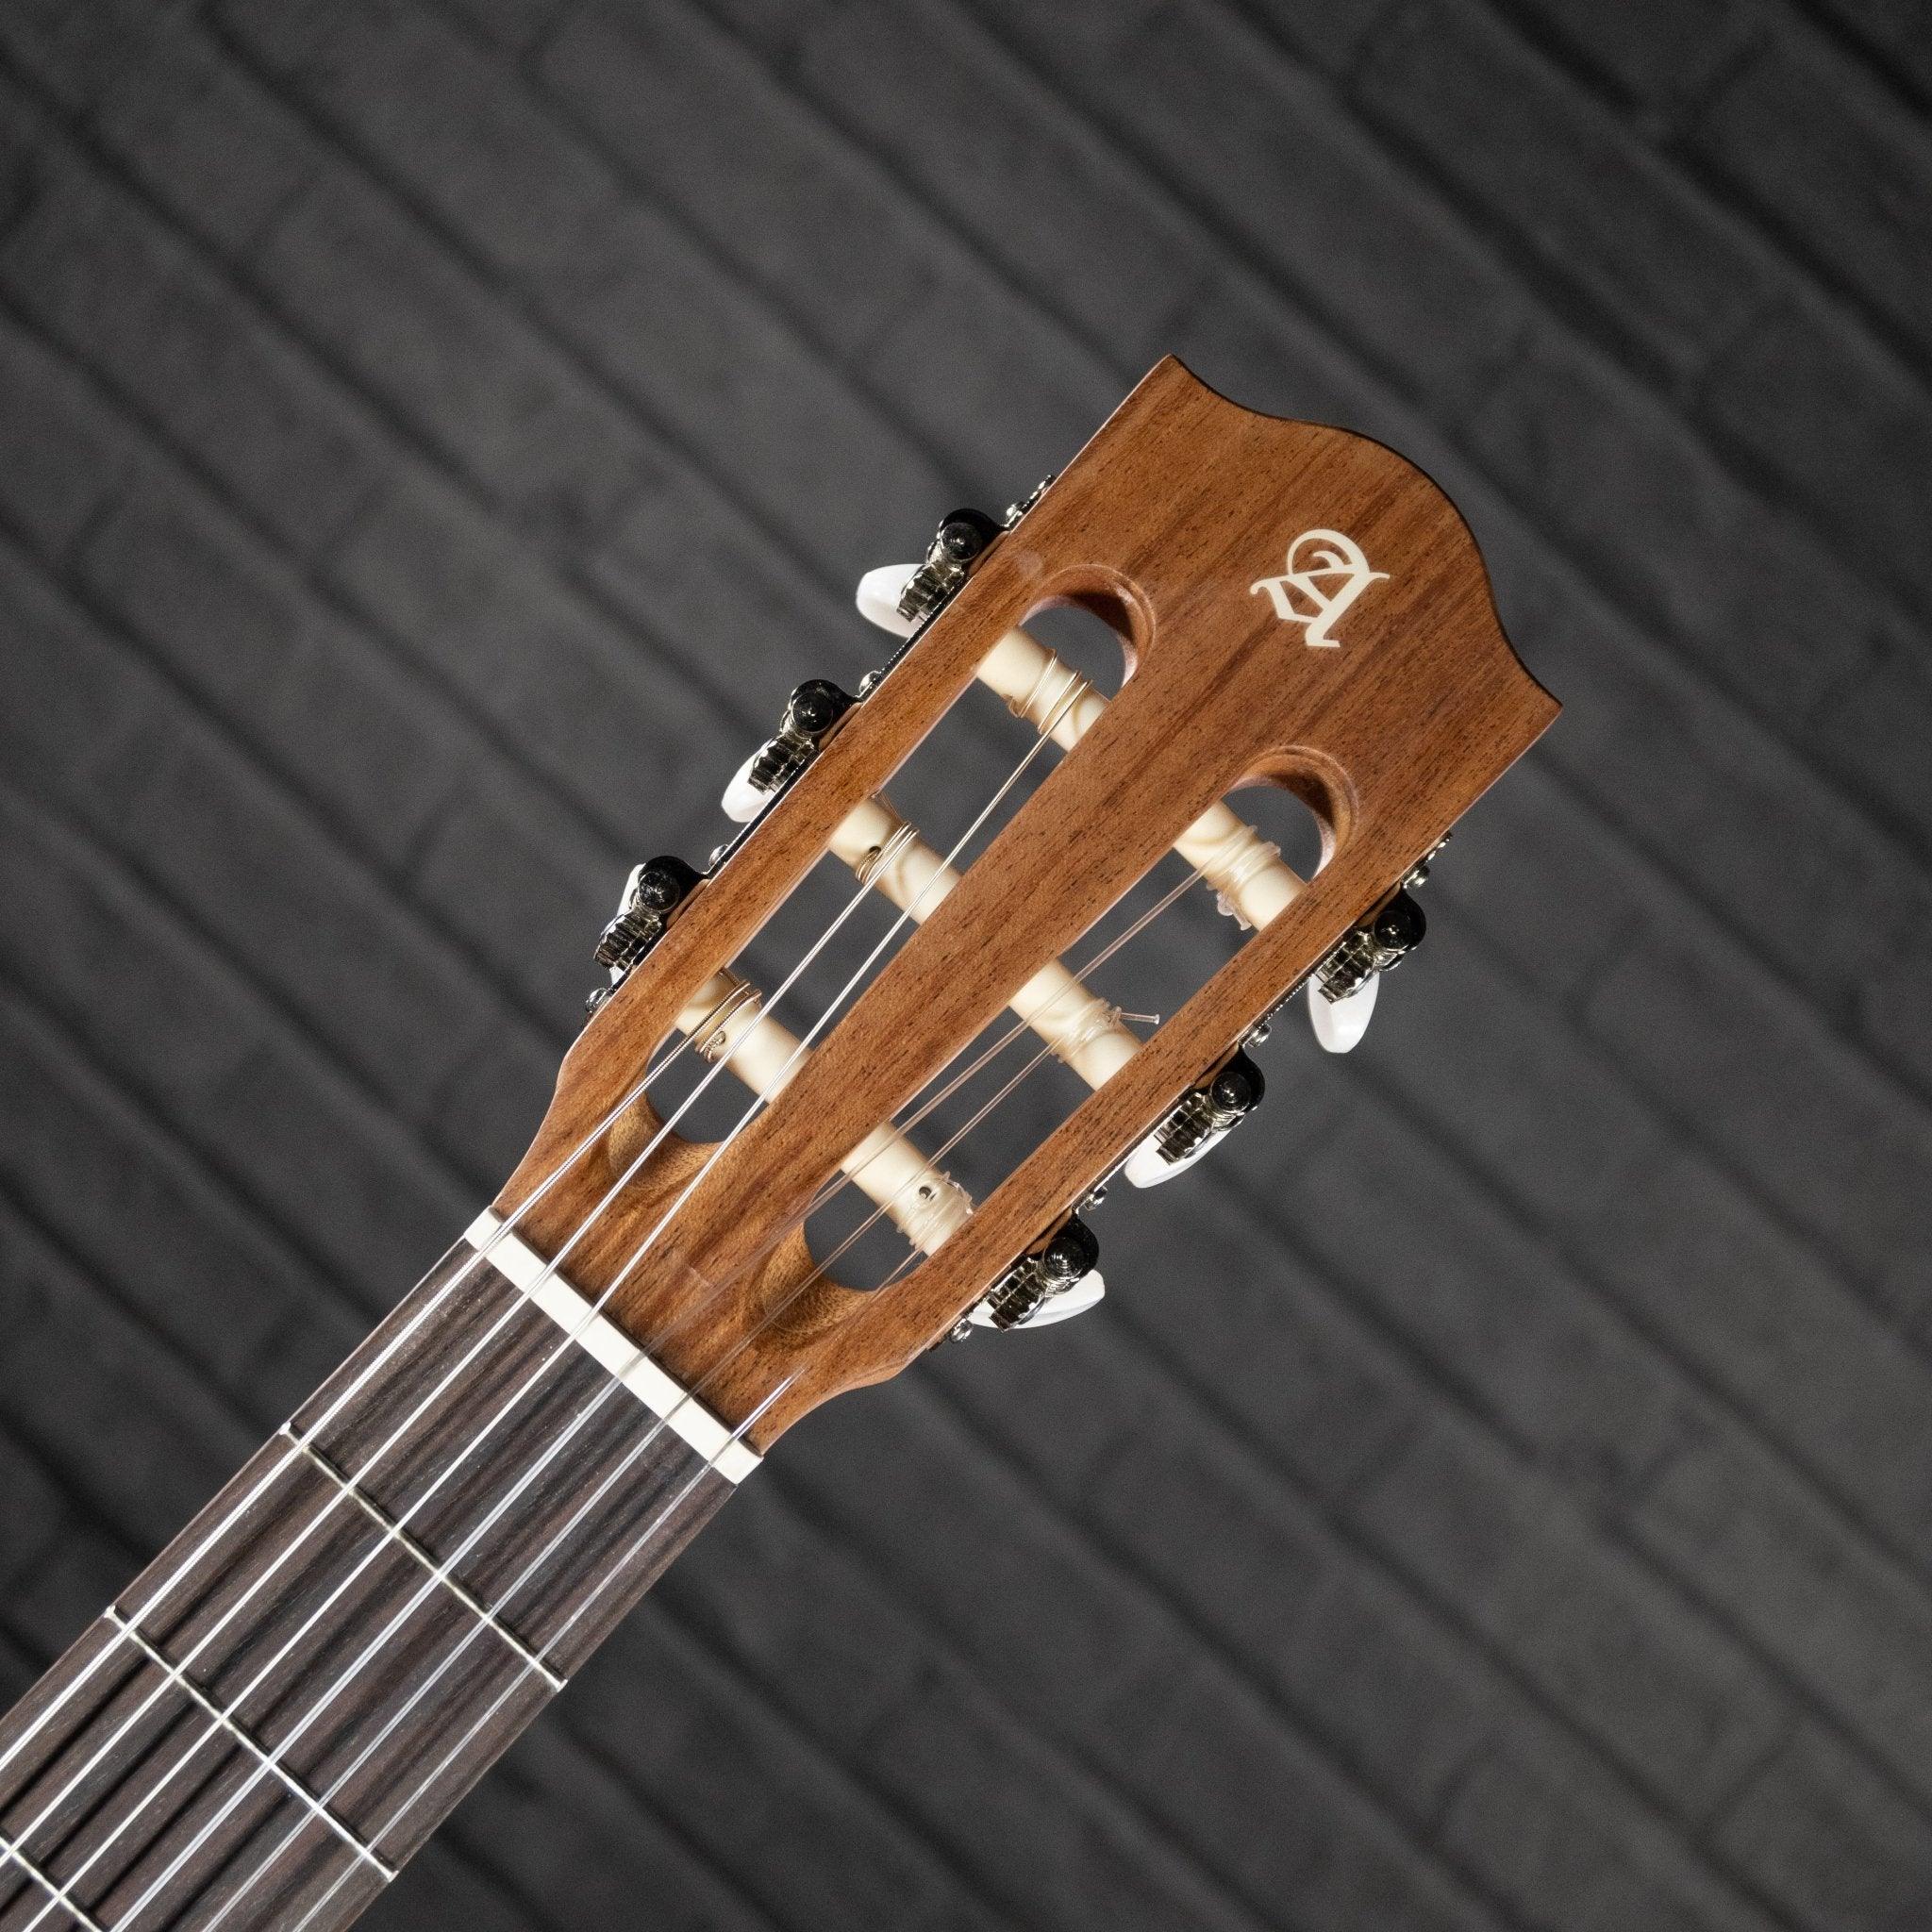 Alhambra 1C Classical Nylon Guitar freeshipping - Impulse Music Co.